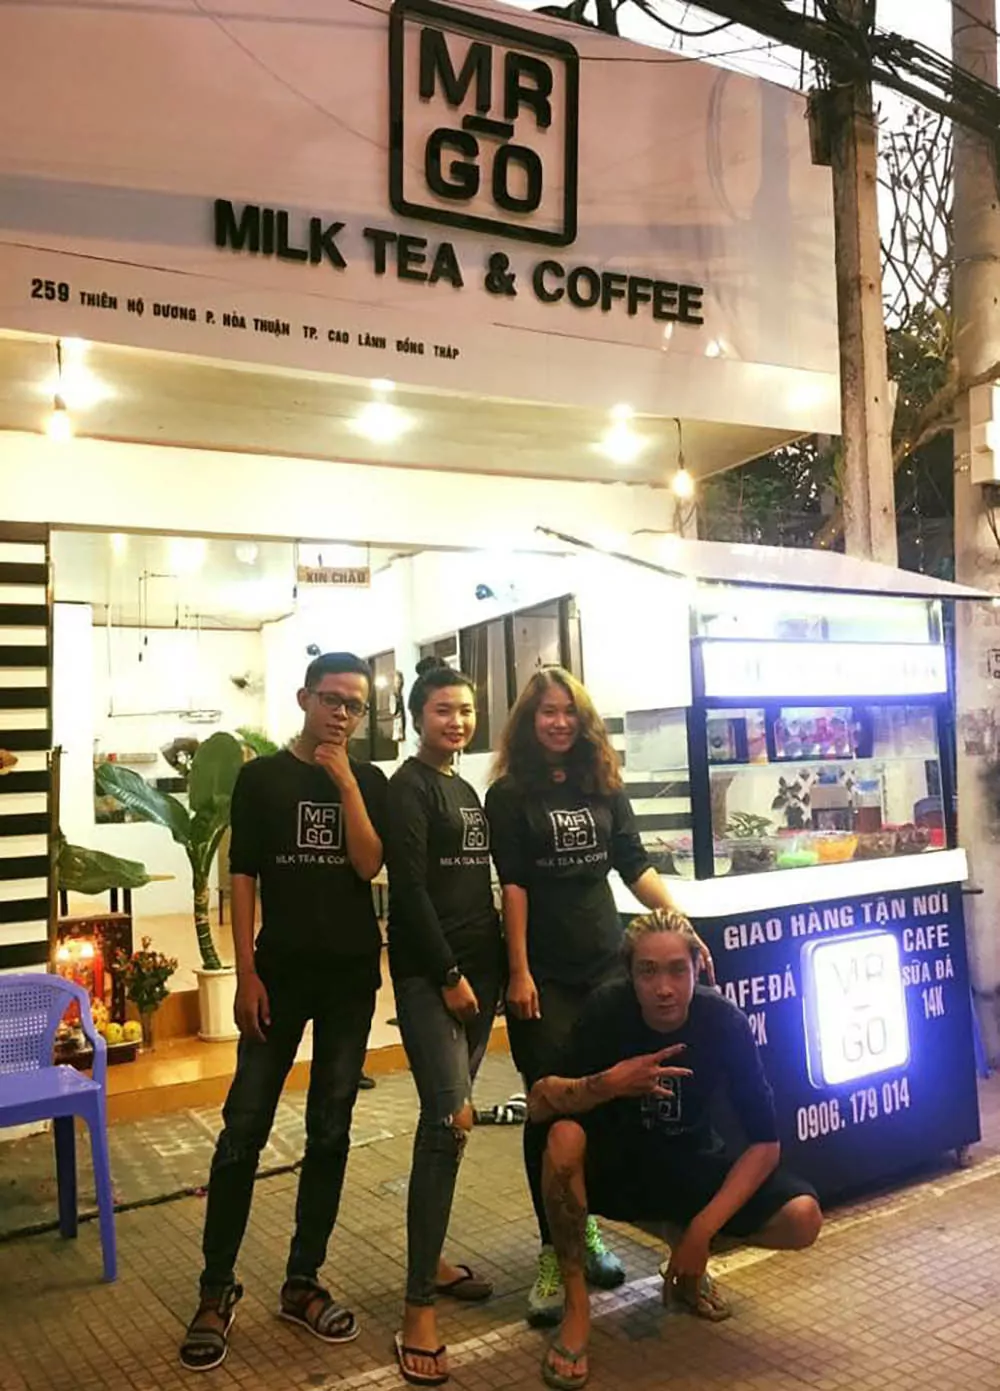 dong phuc mr.go milk tea & coffee